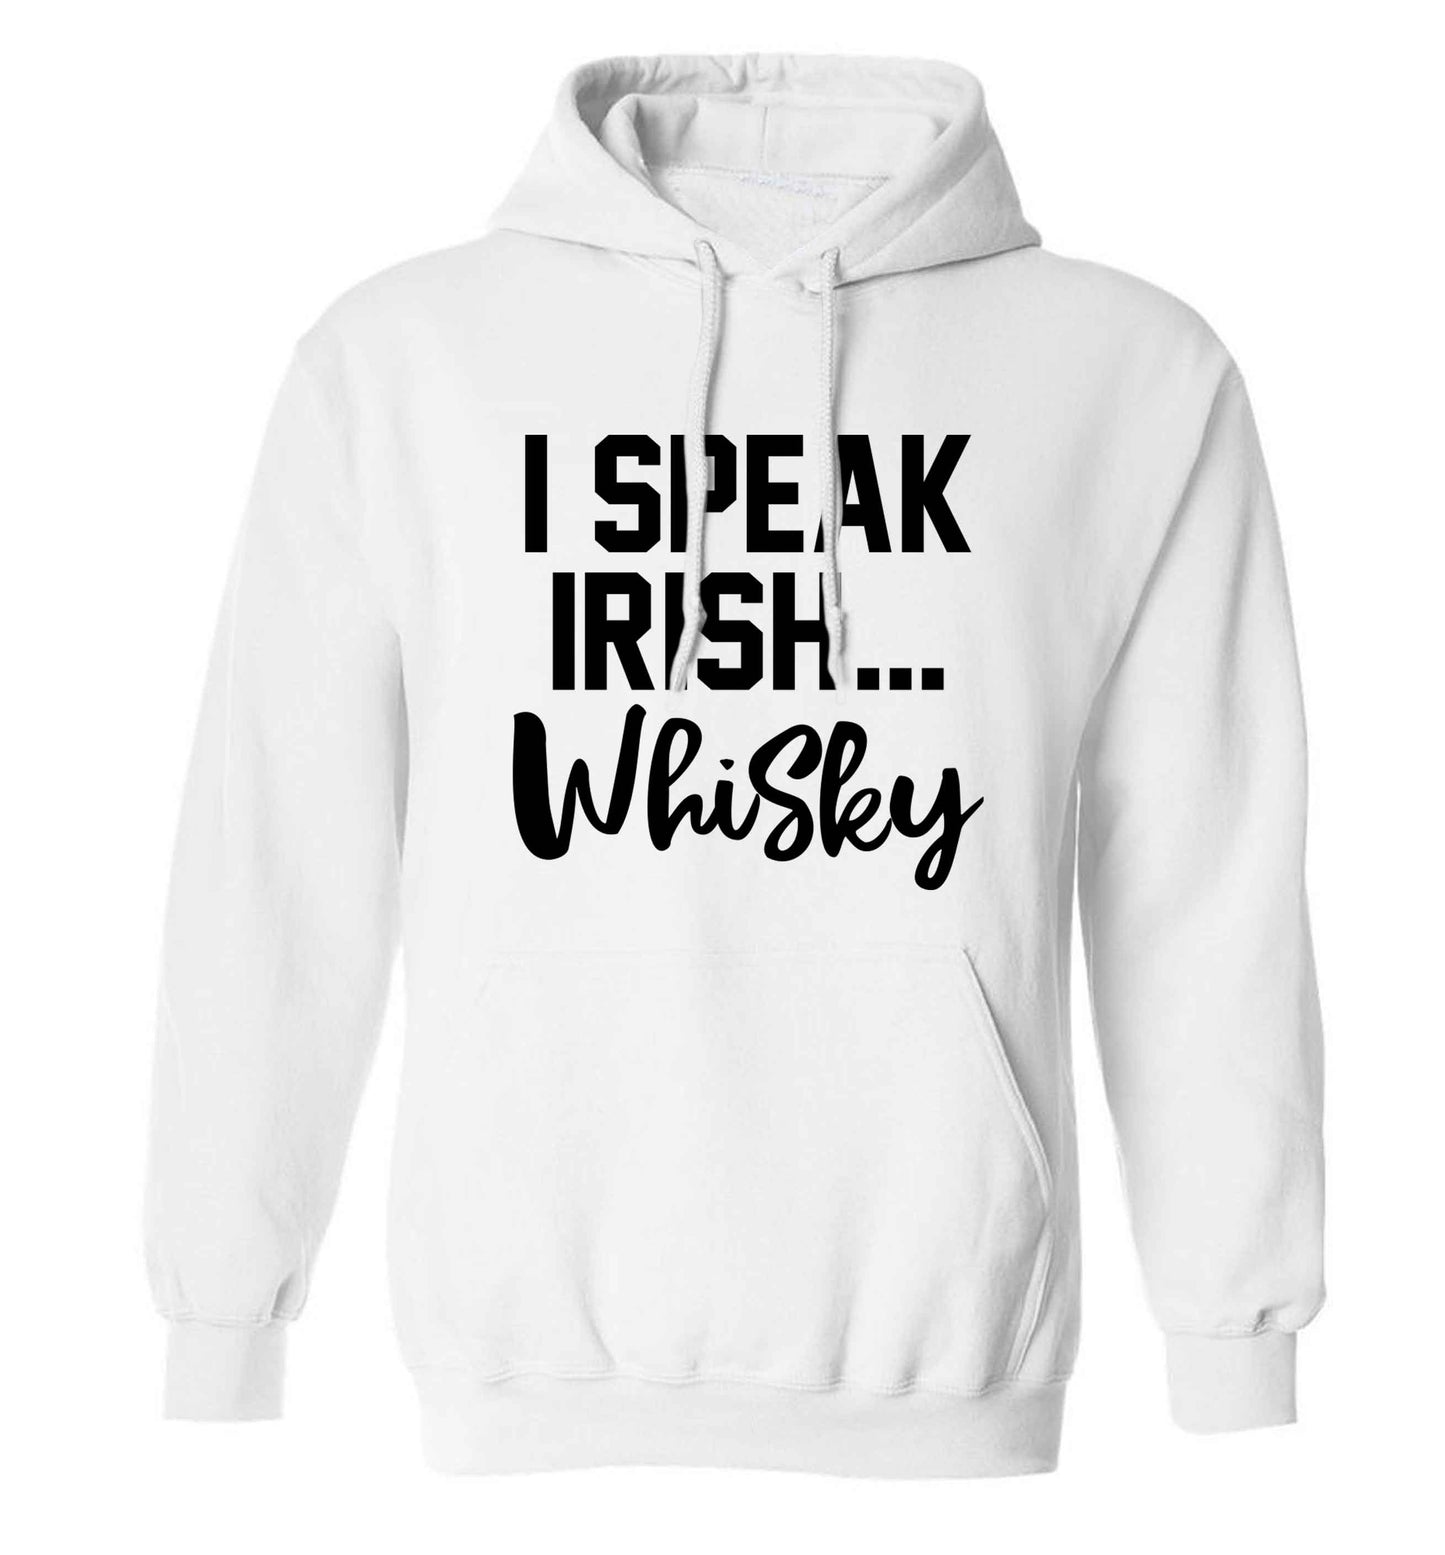 I speak Irish whisky adults unisex white hoodie 2XL